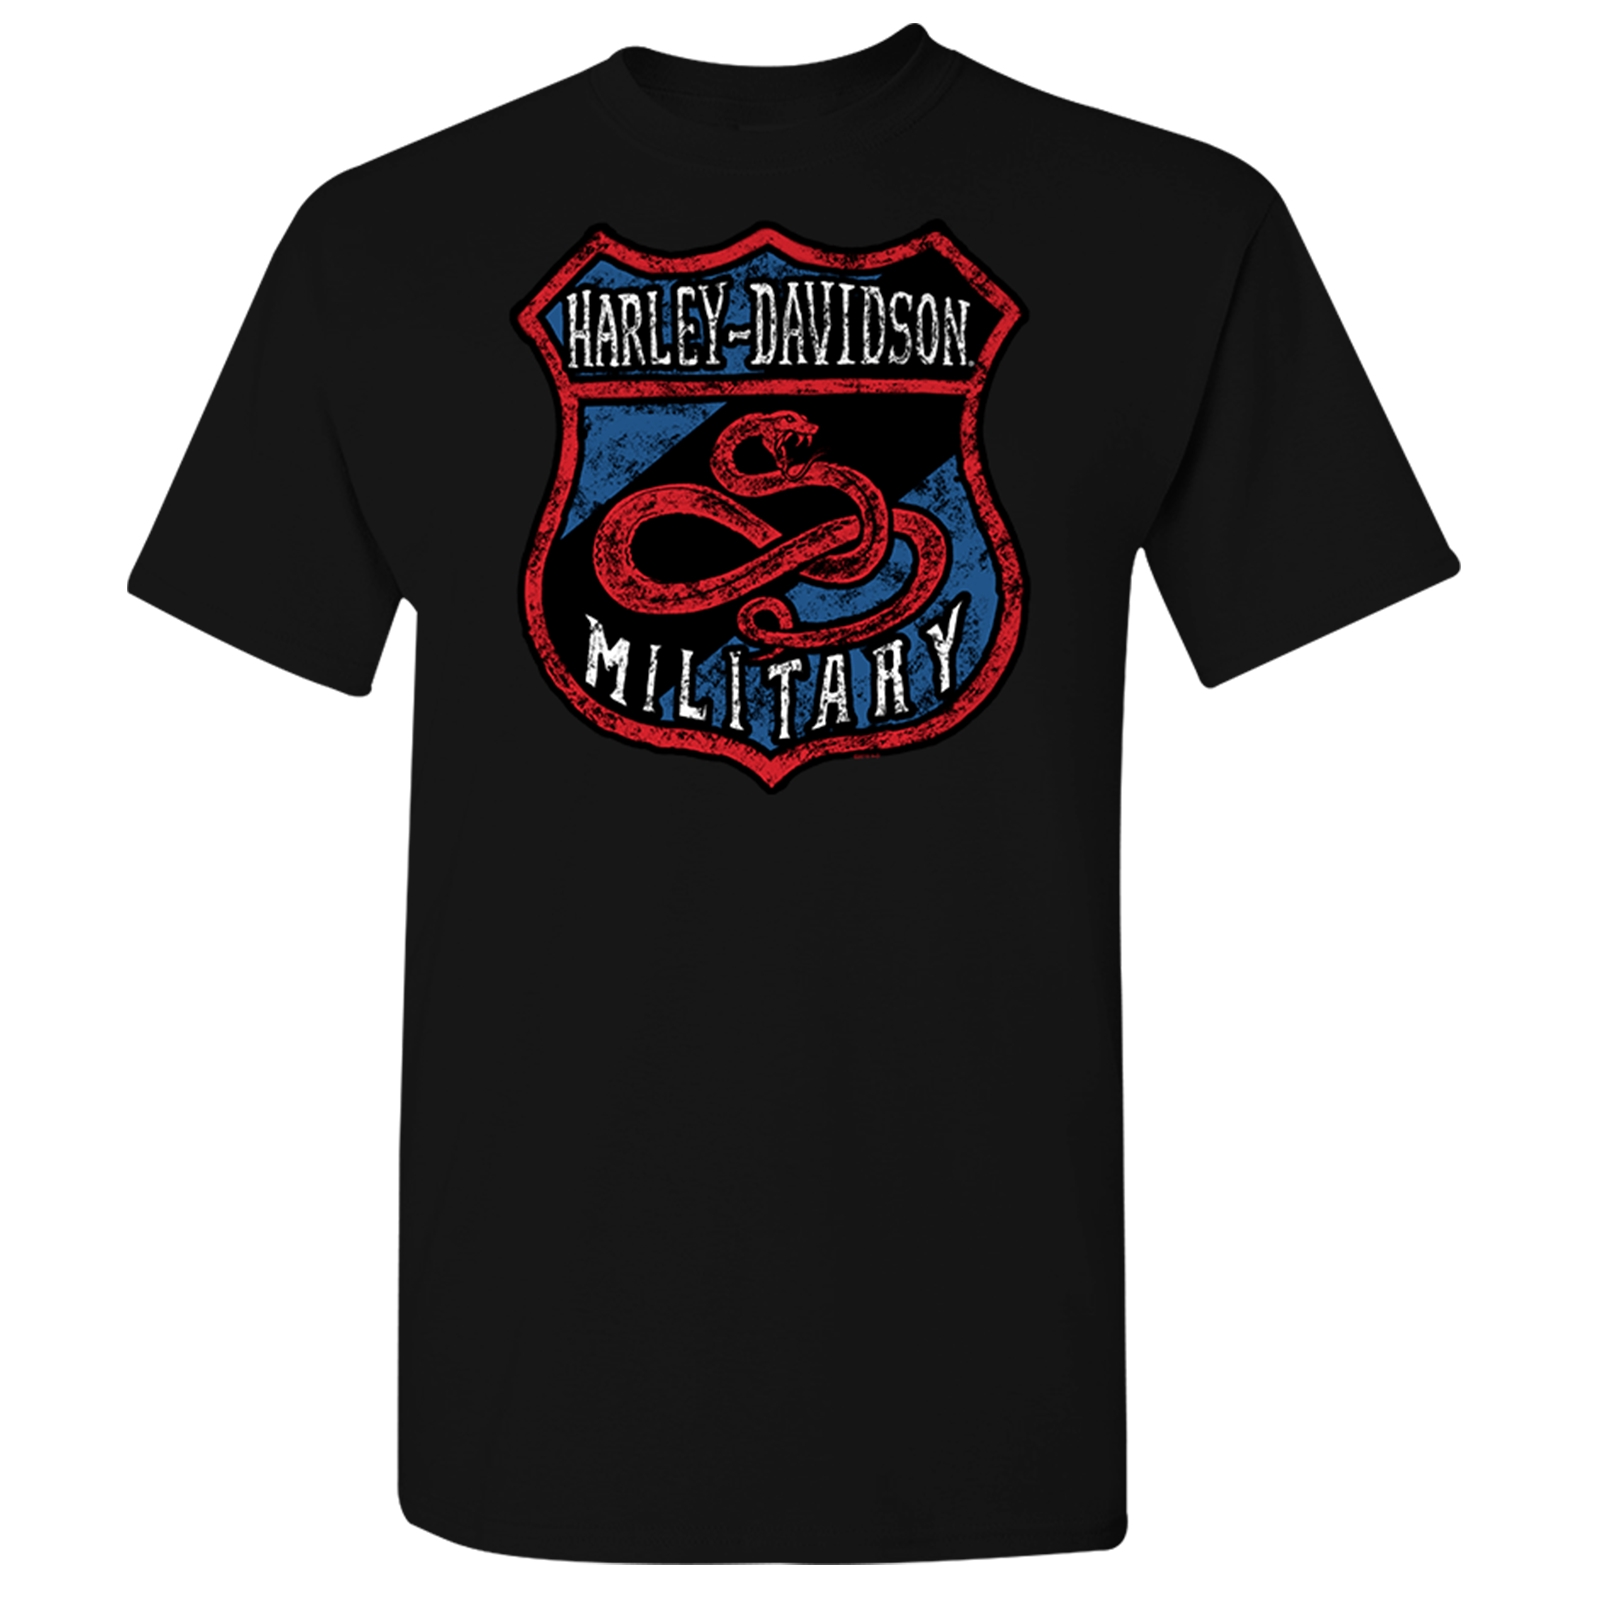 Harley-Davidson Military - Men's Black Graphic T-Shirt - Al Udeid Air Base | Snake Shield 2X